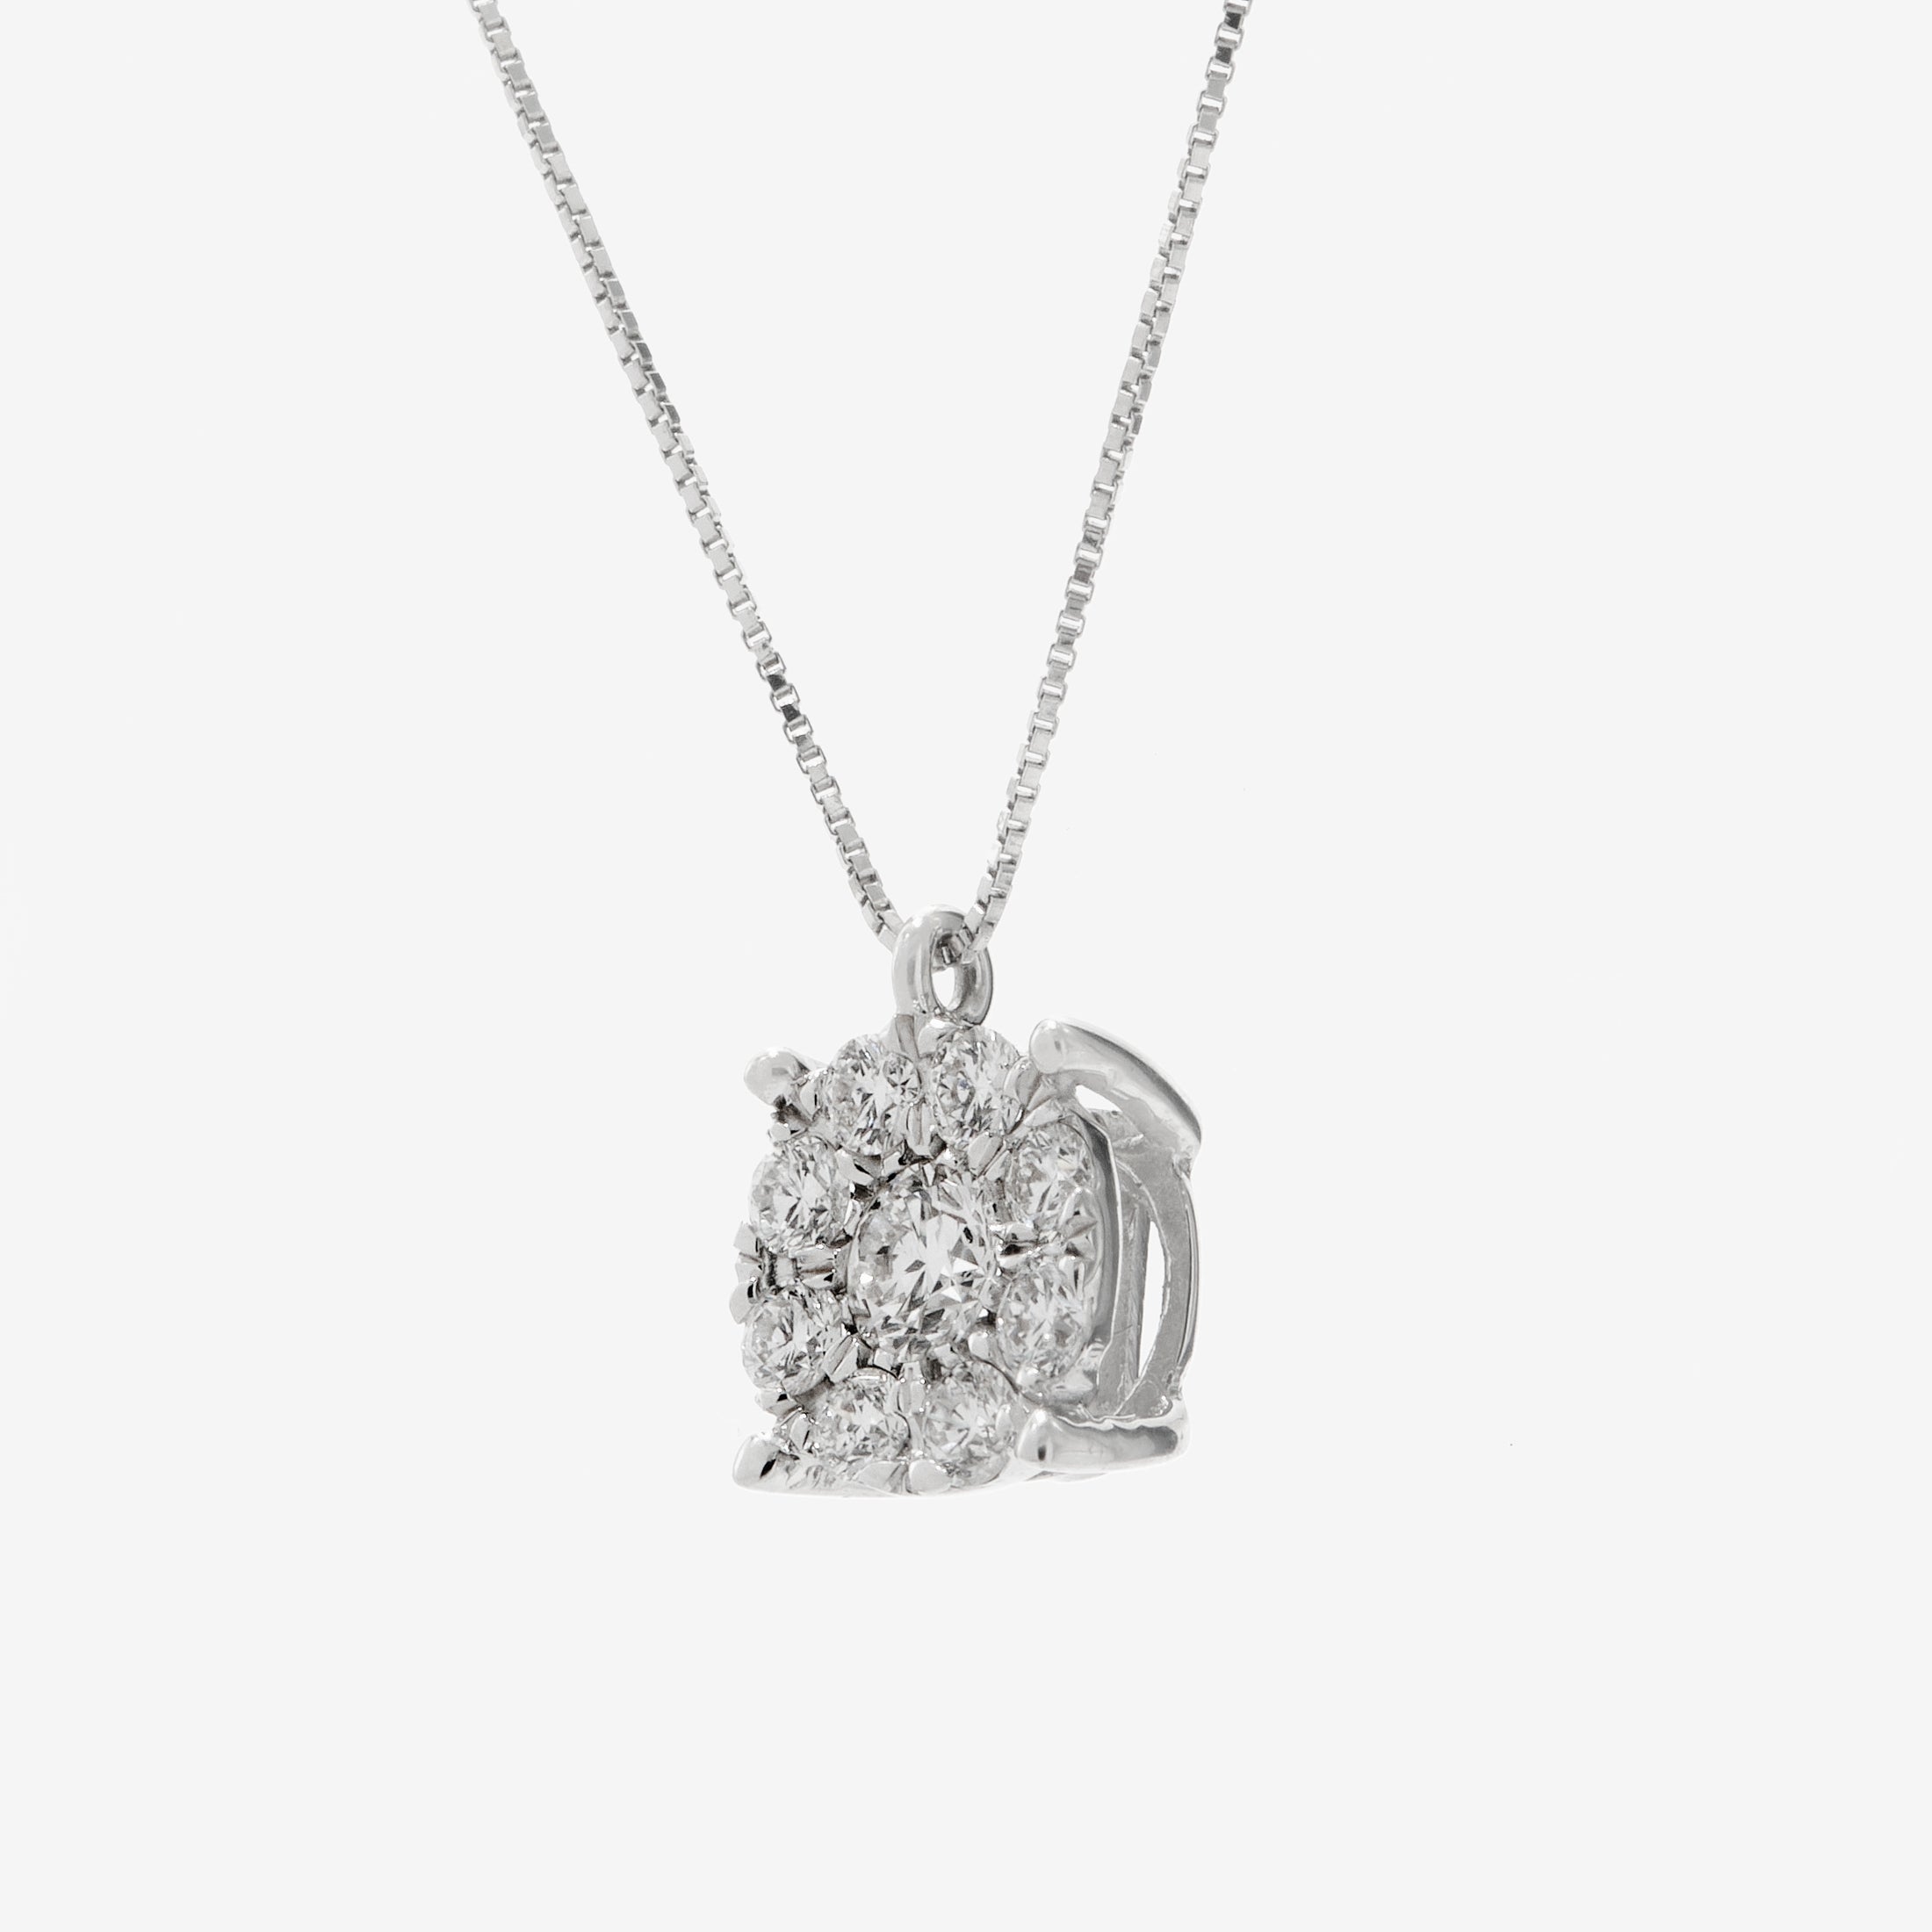 Kiran necklace with diamonds